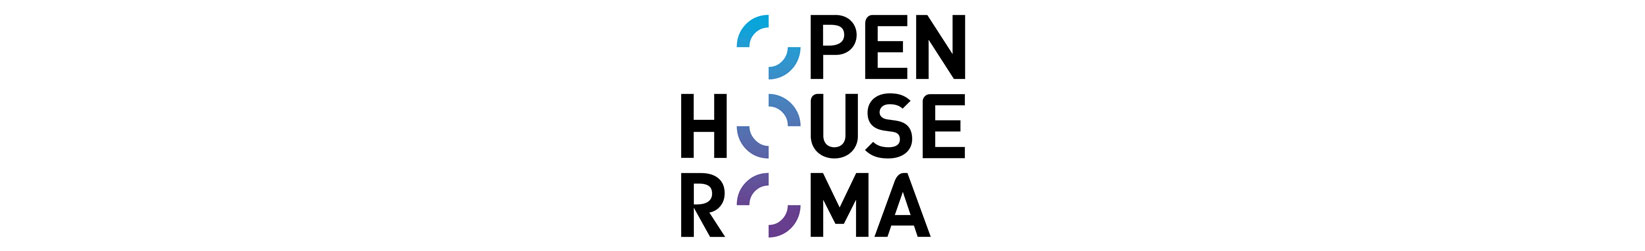 Open House Roma 2012